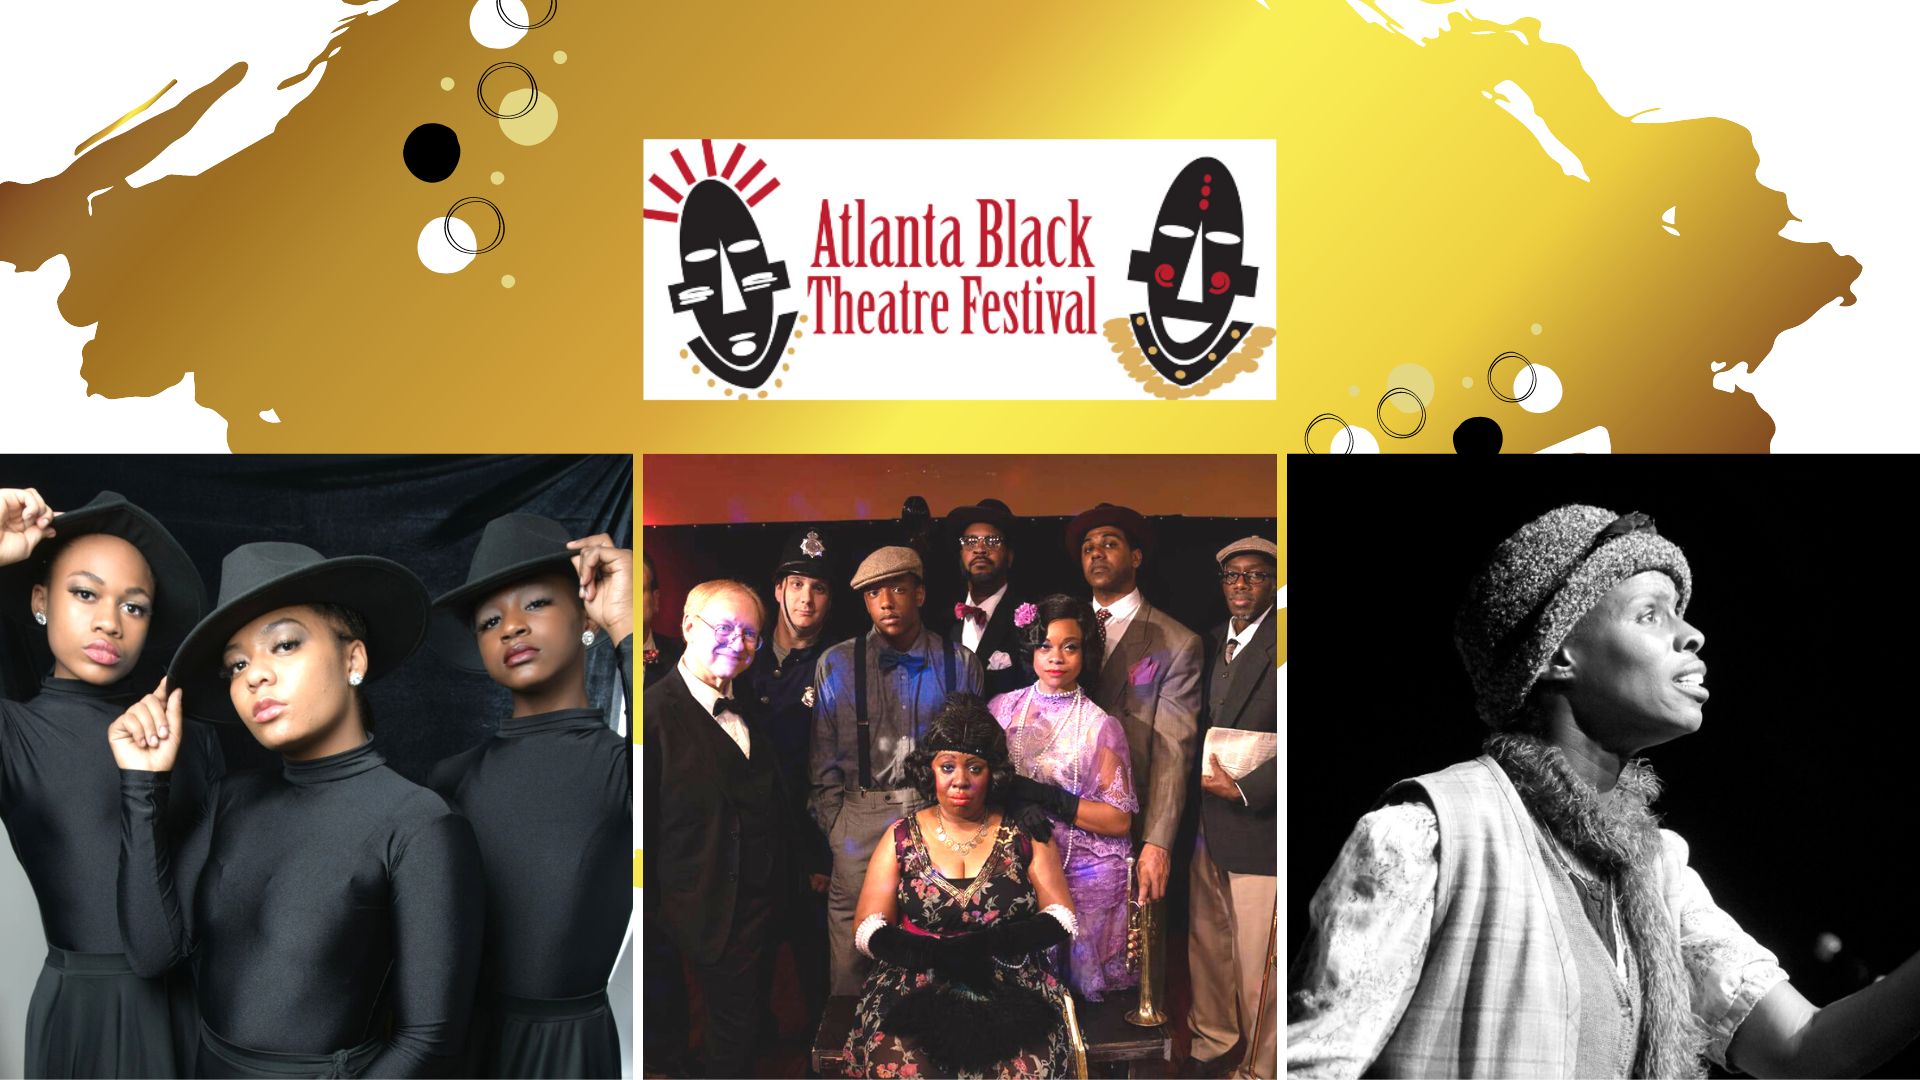 Atlanta Black Theatre Festival and Creative Arts Conference, Atlanta, Georgia, United States